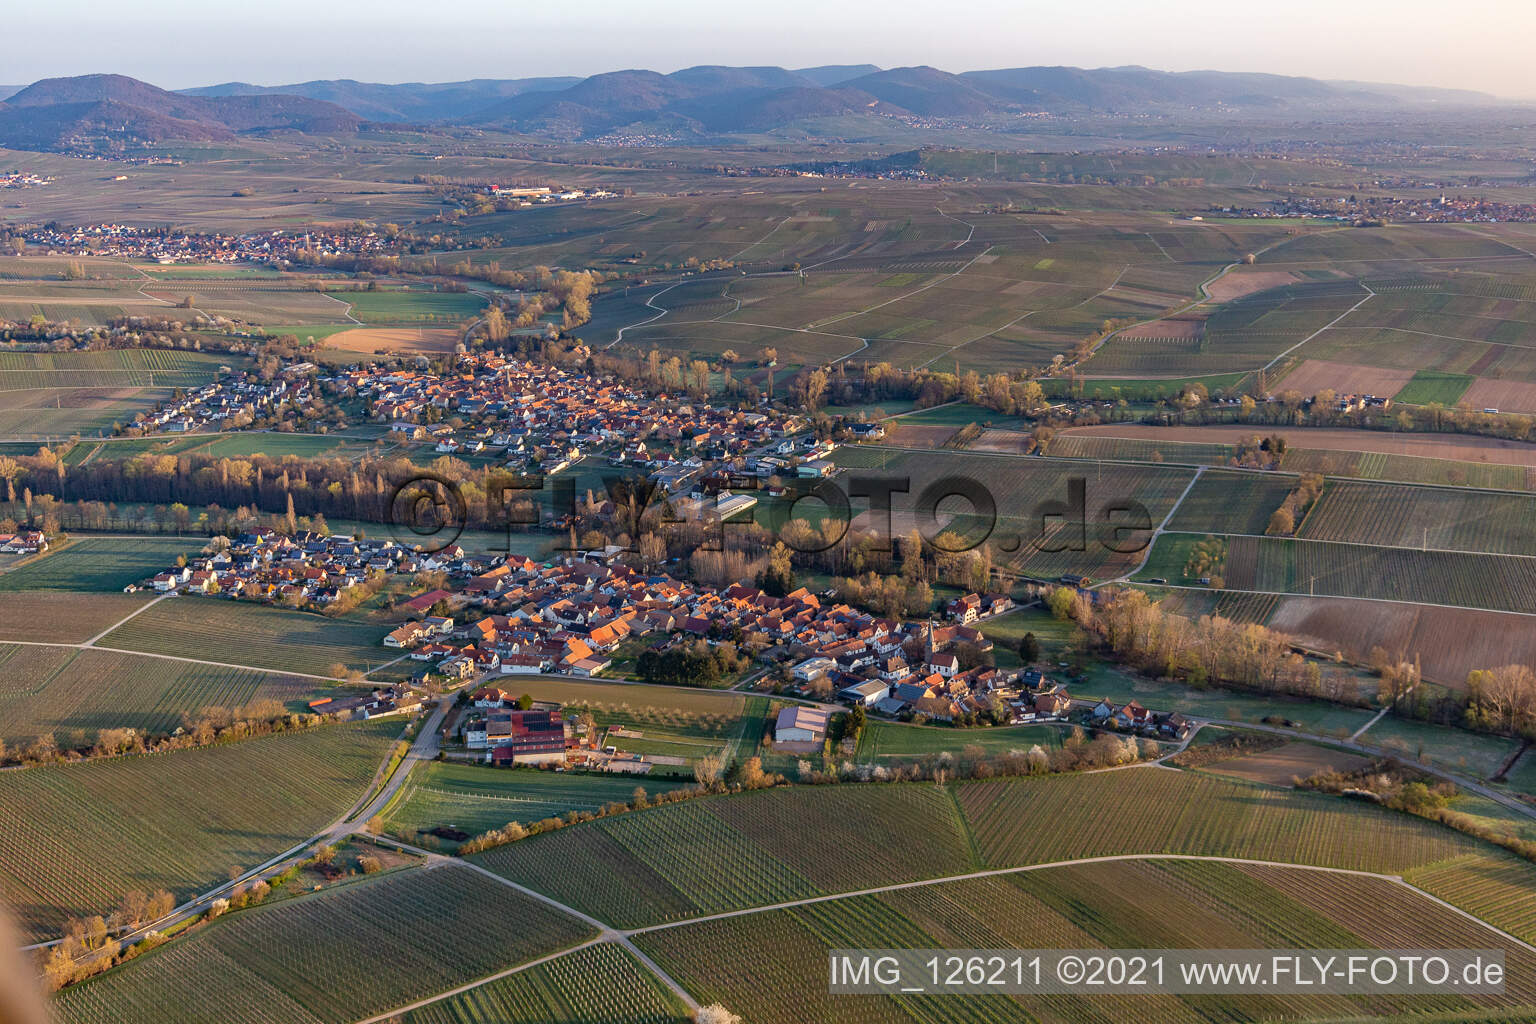 Aerial view of Village - view on the edge of agricultural fields and wine yards in the district Heuchelheim in Heuchelheim-Klingen in the state Rhineland-Palatinate, Germany